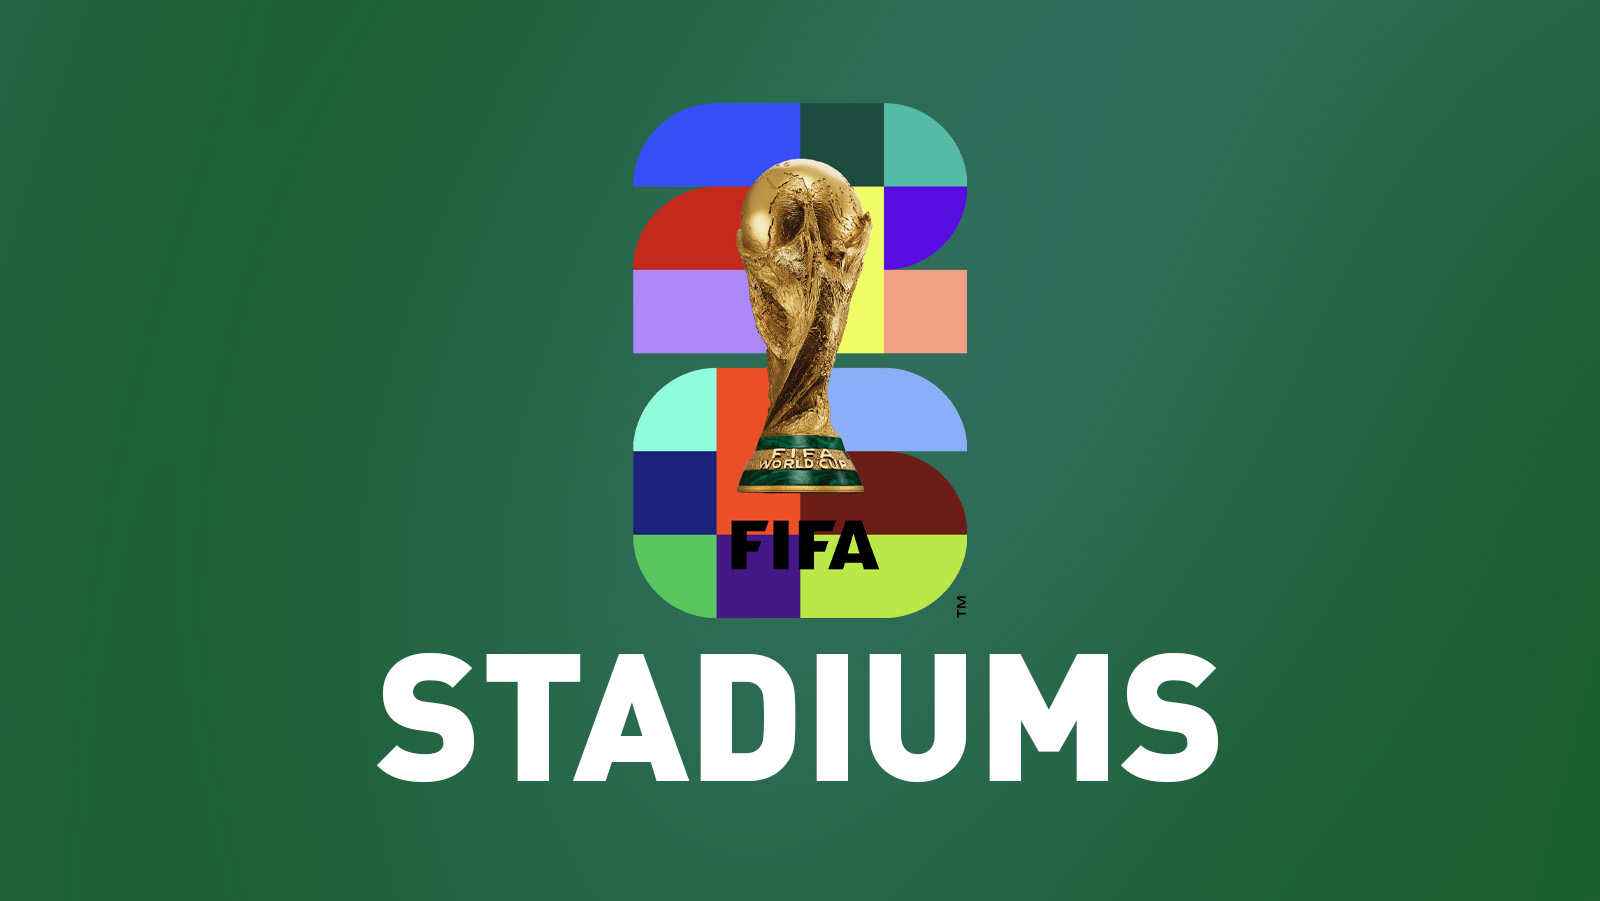 World Cup 2026 Stadiums